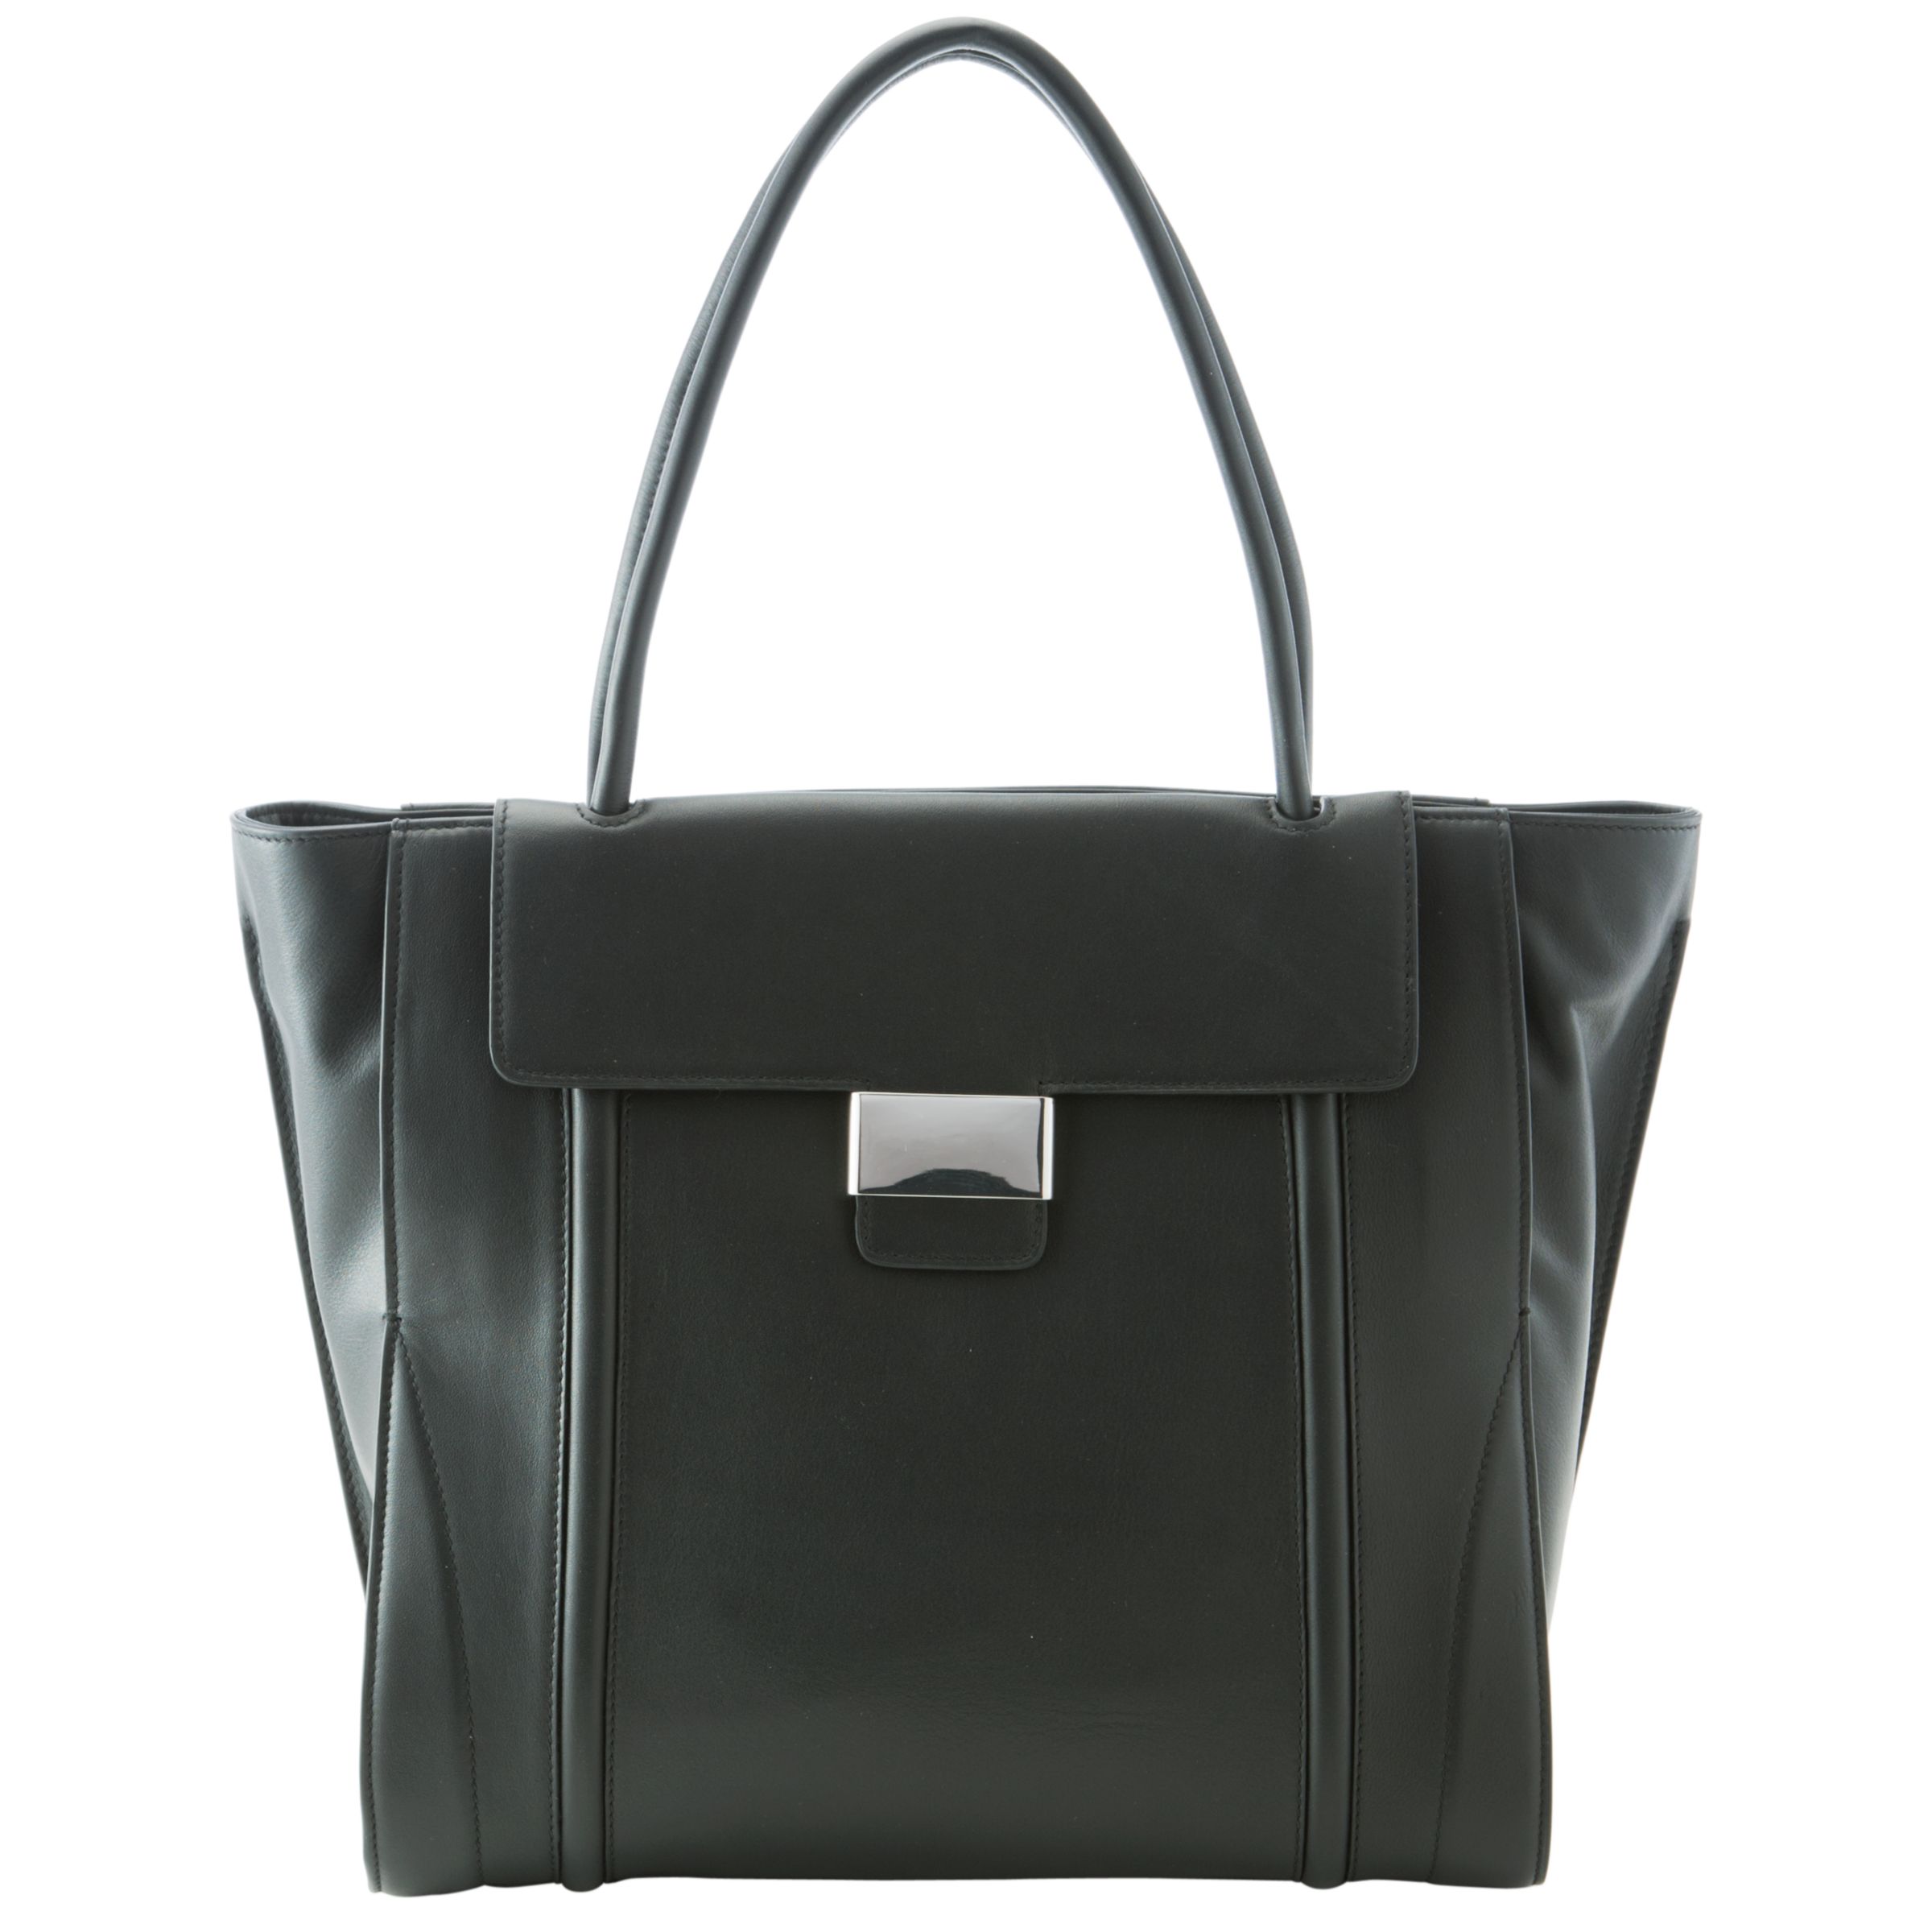 L.K. Bennett Chiara Large Tote Handbag, Black at JohnLewis